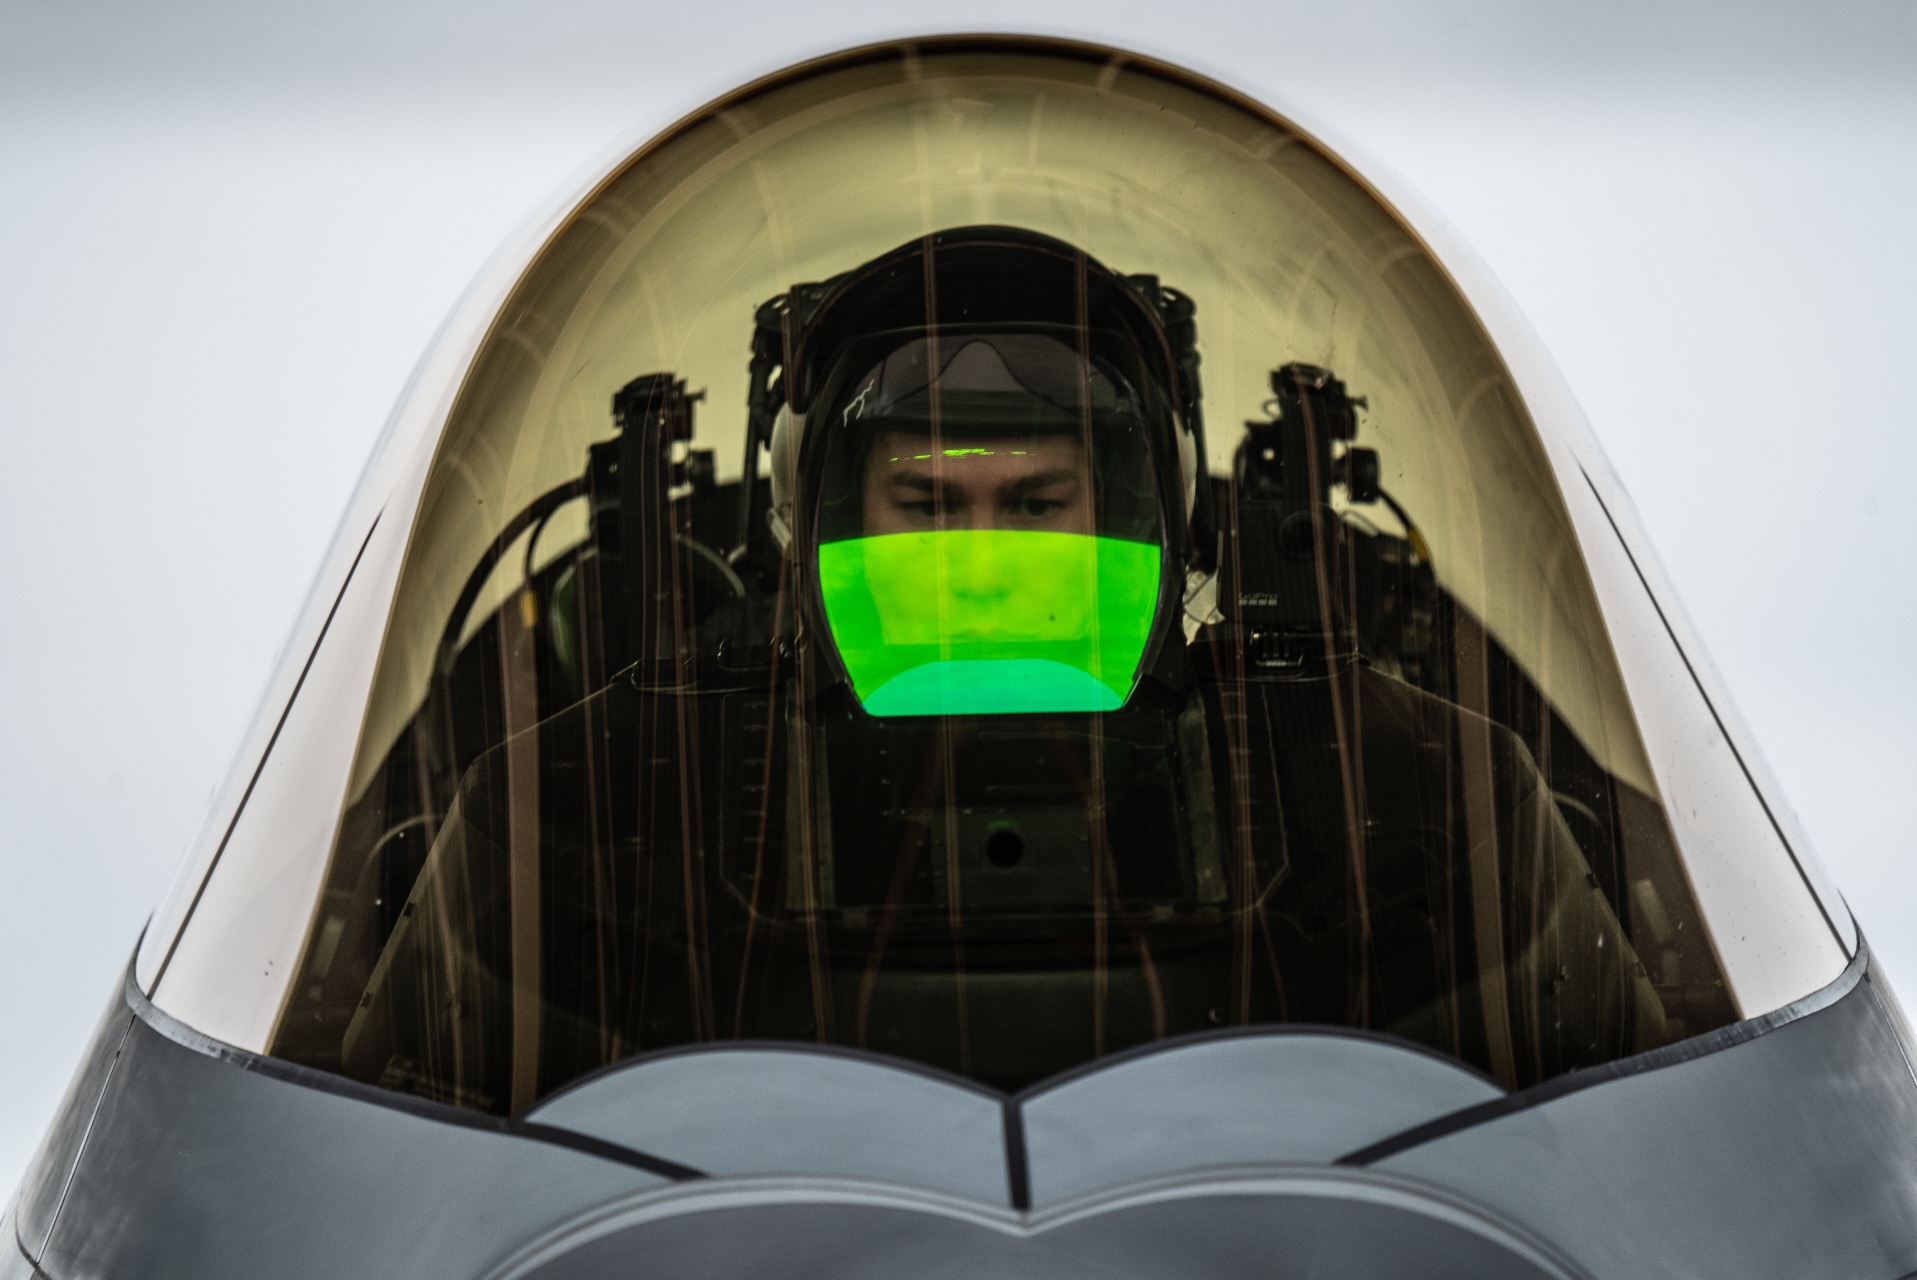 F-22 Raptor Demonstration Team commander and pilot, configures the cockpit of the F-22 Raptor before an aerial demonstration